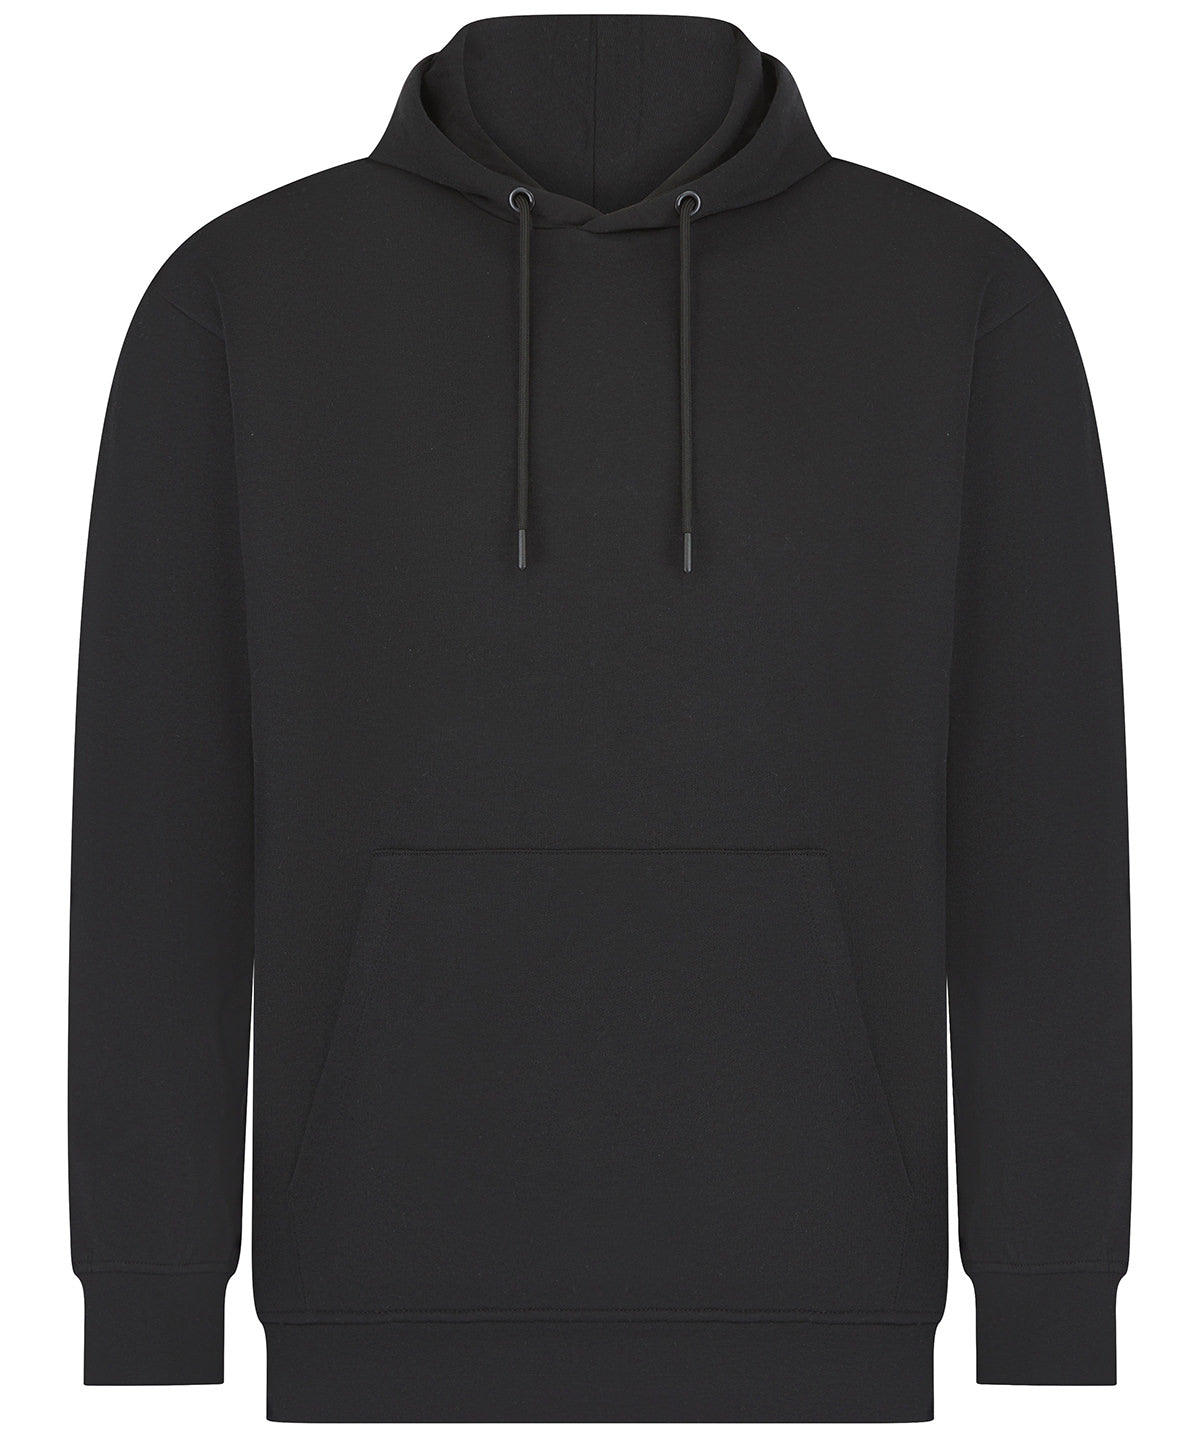 Unisex sustainable fashion hoodie